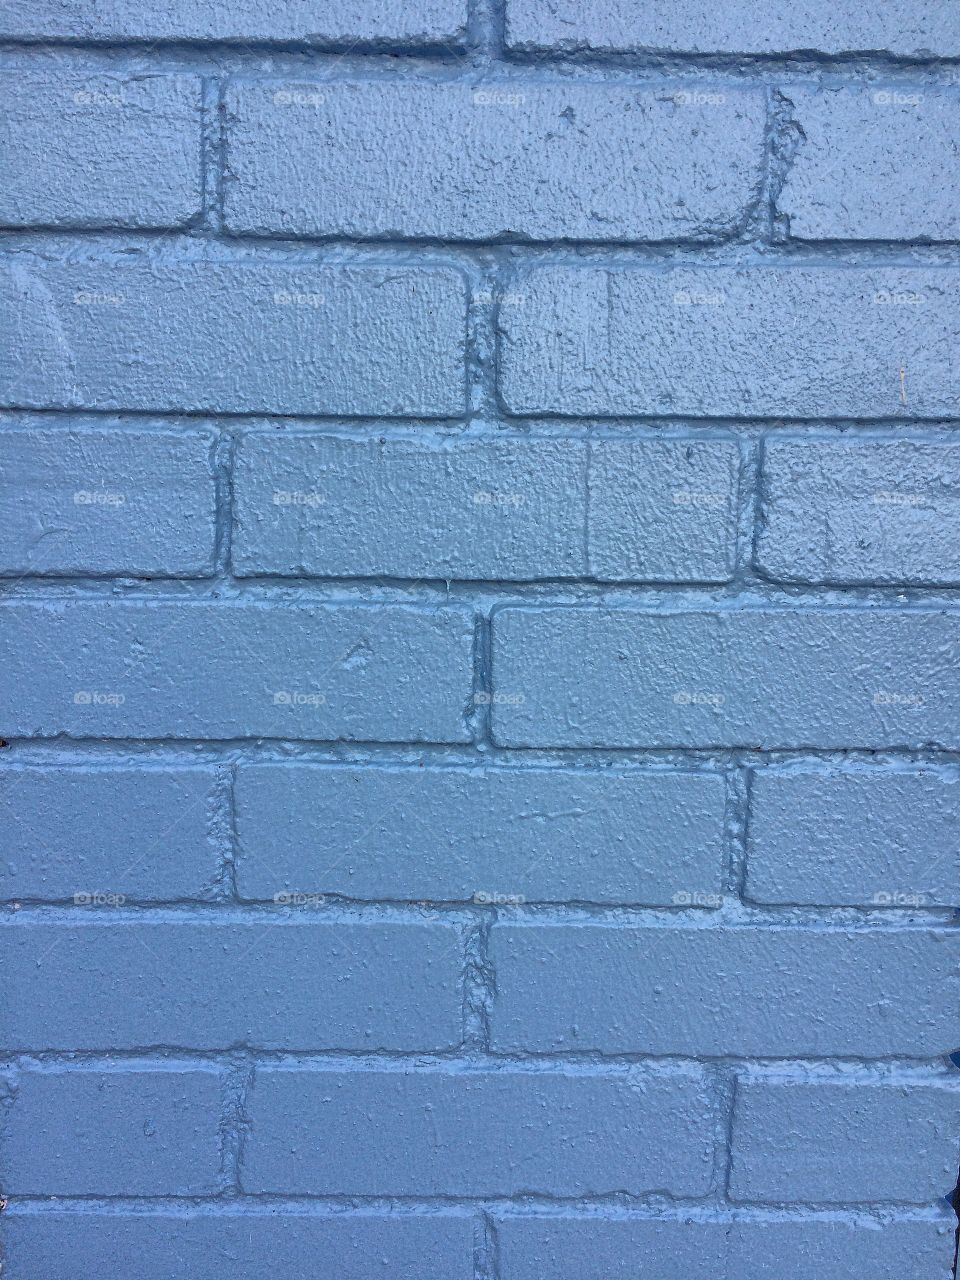 Blue Brick